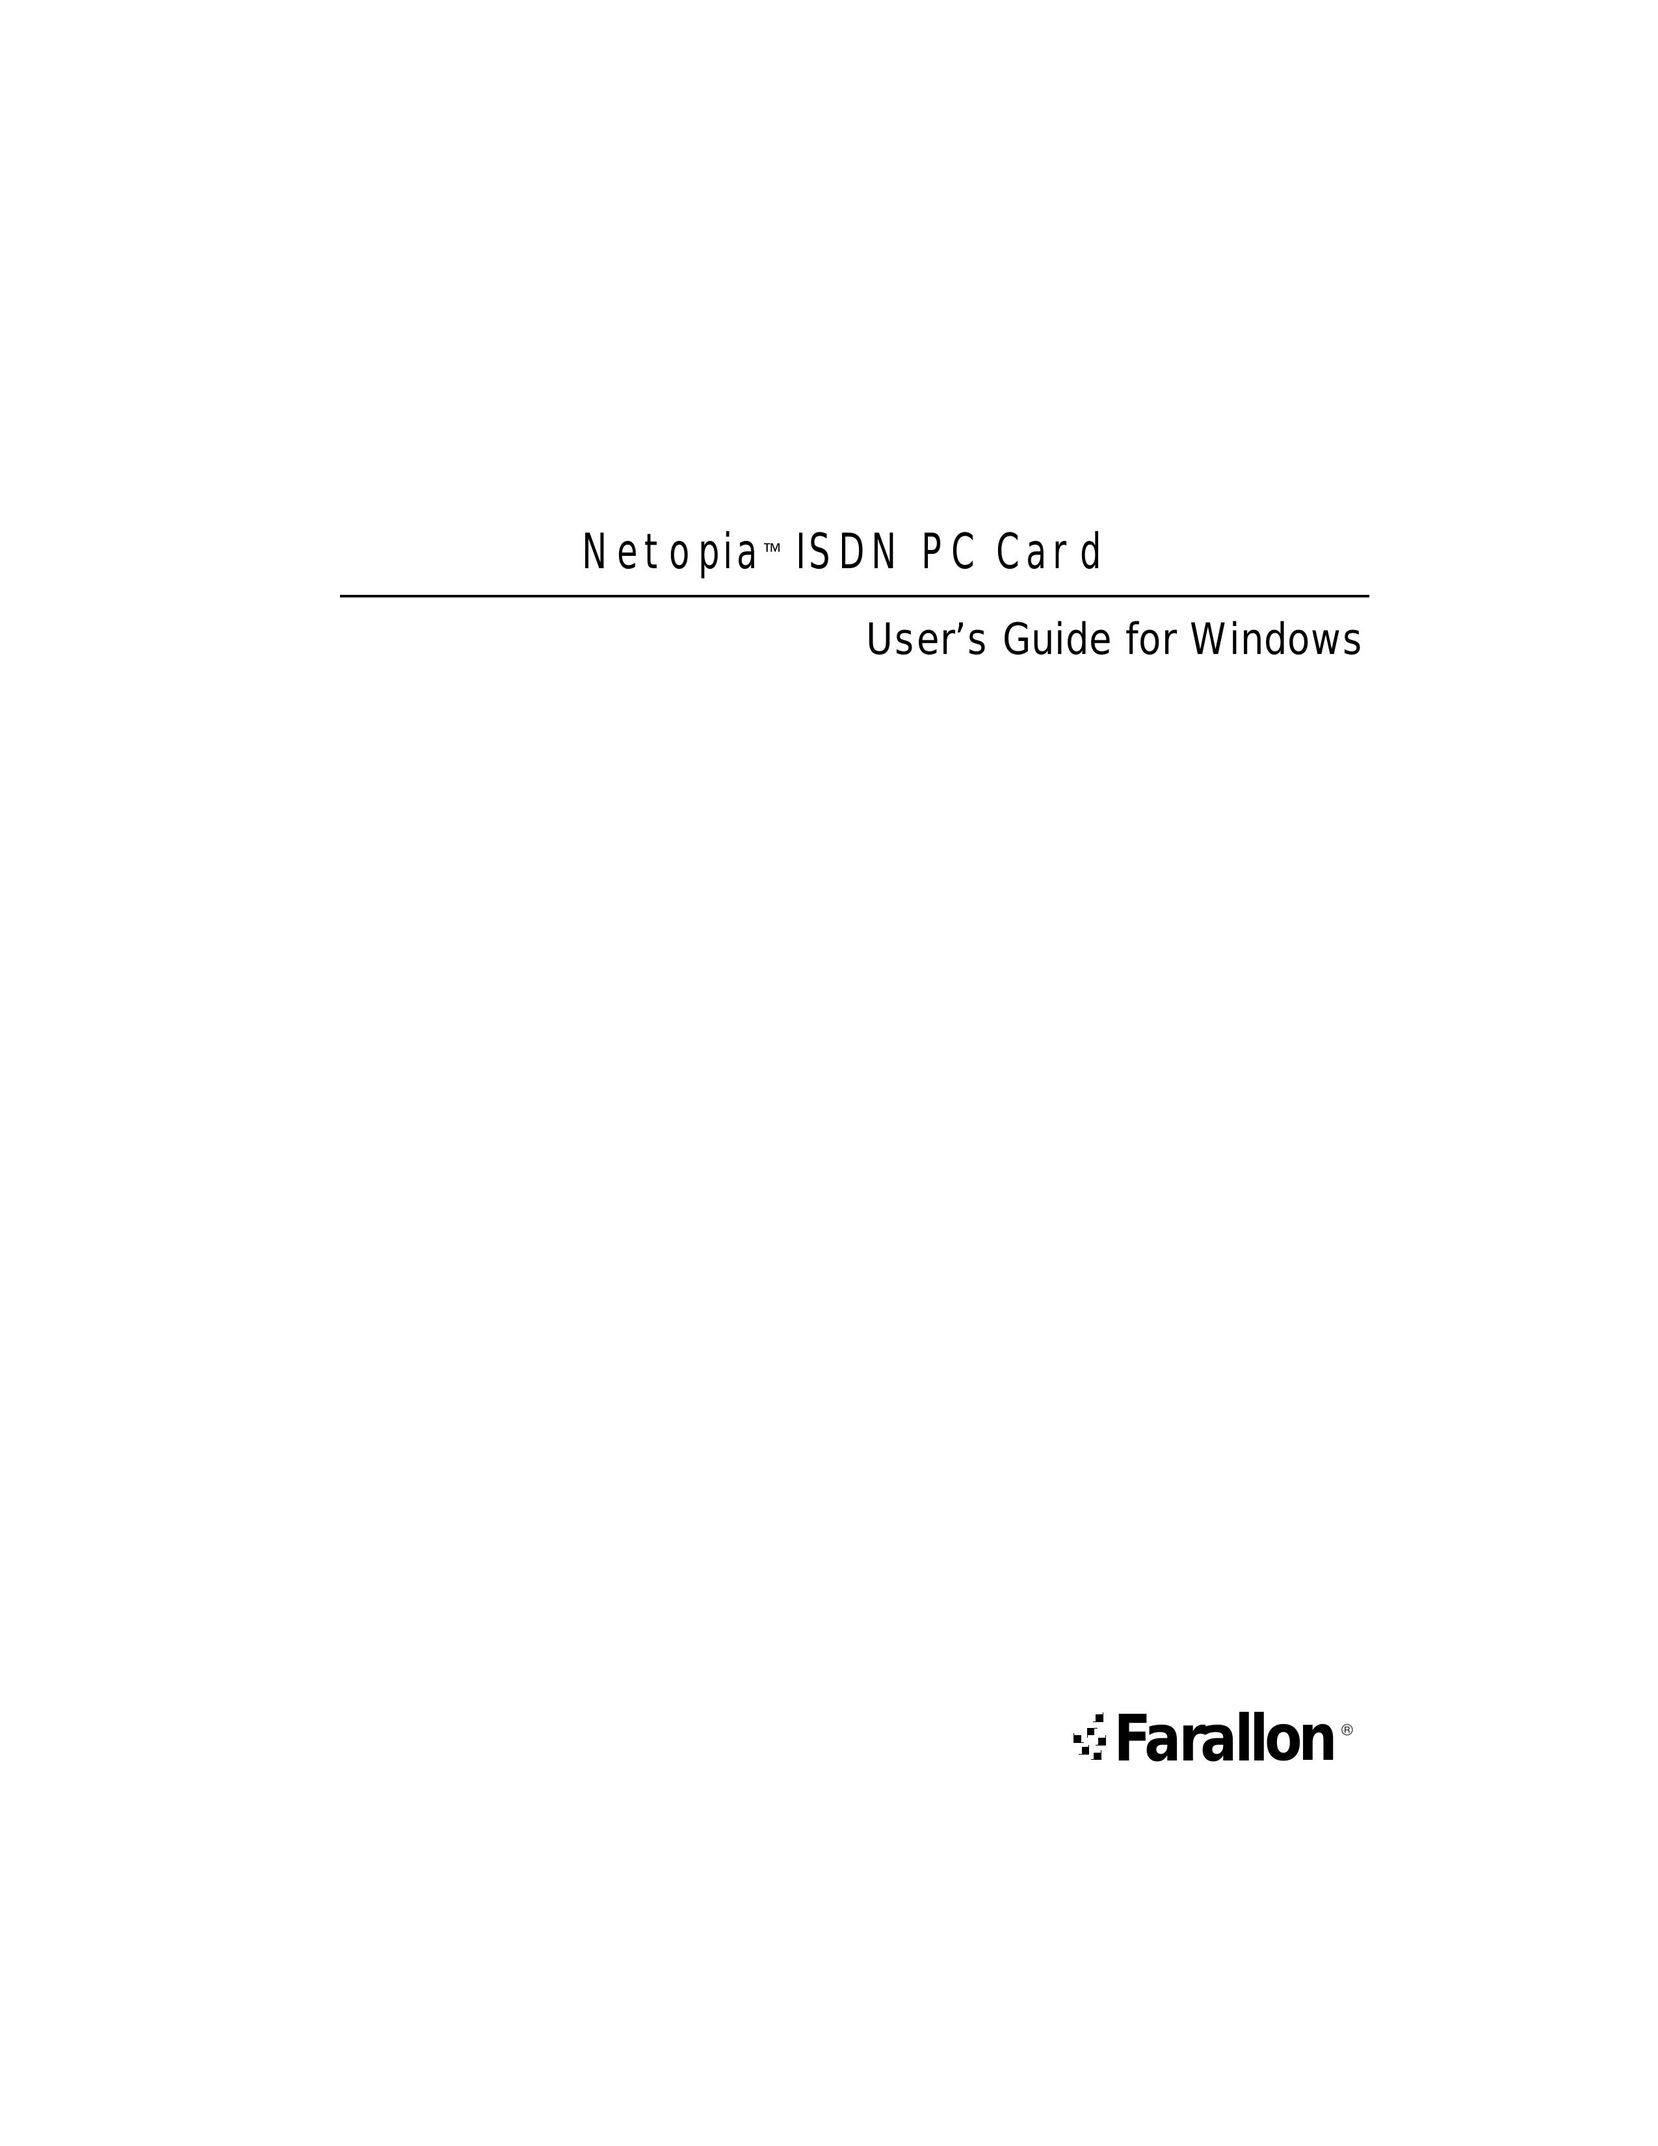 Farallon Communications NetopiaTM Network Card User Manual